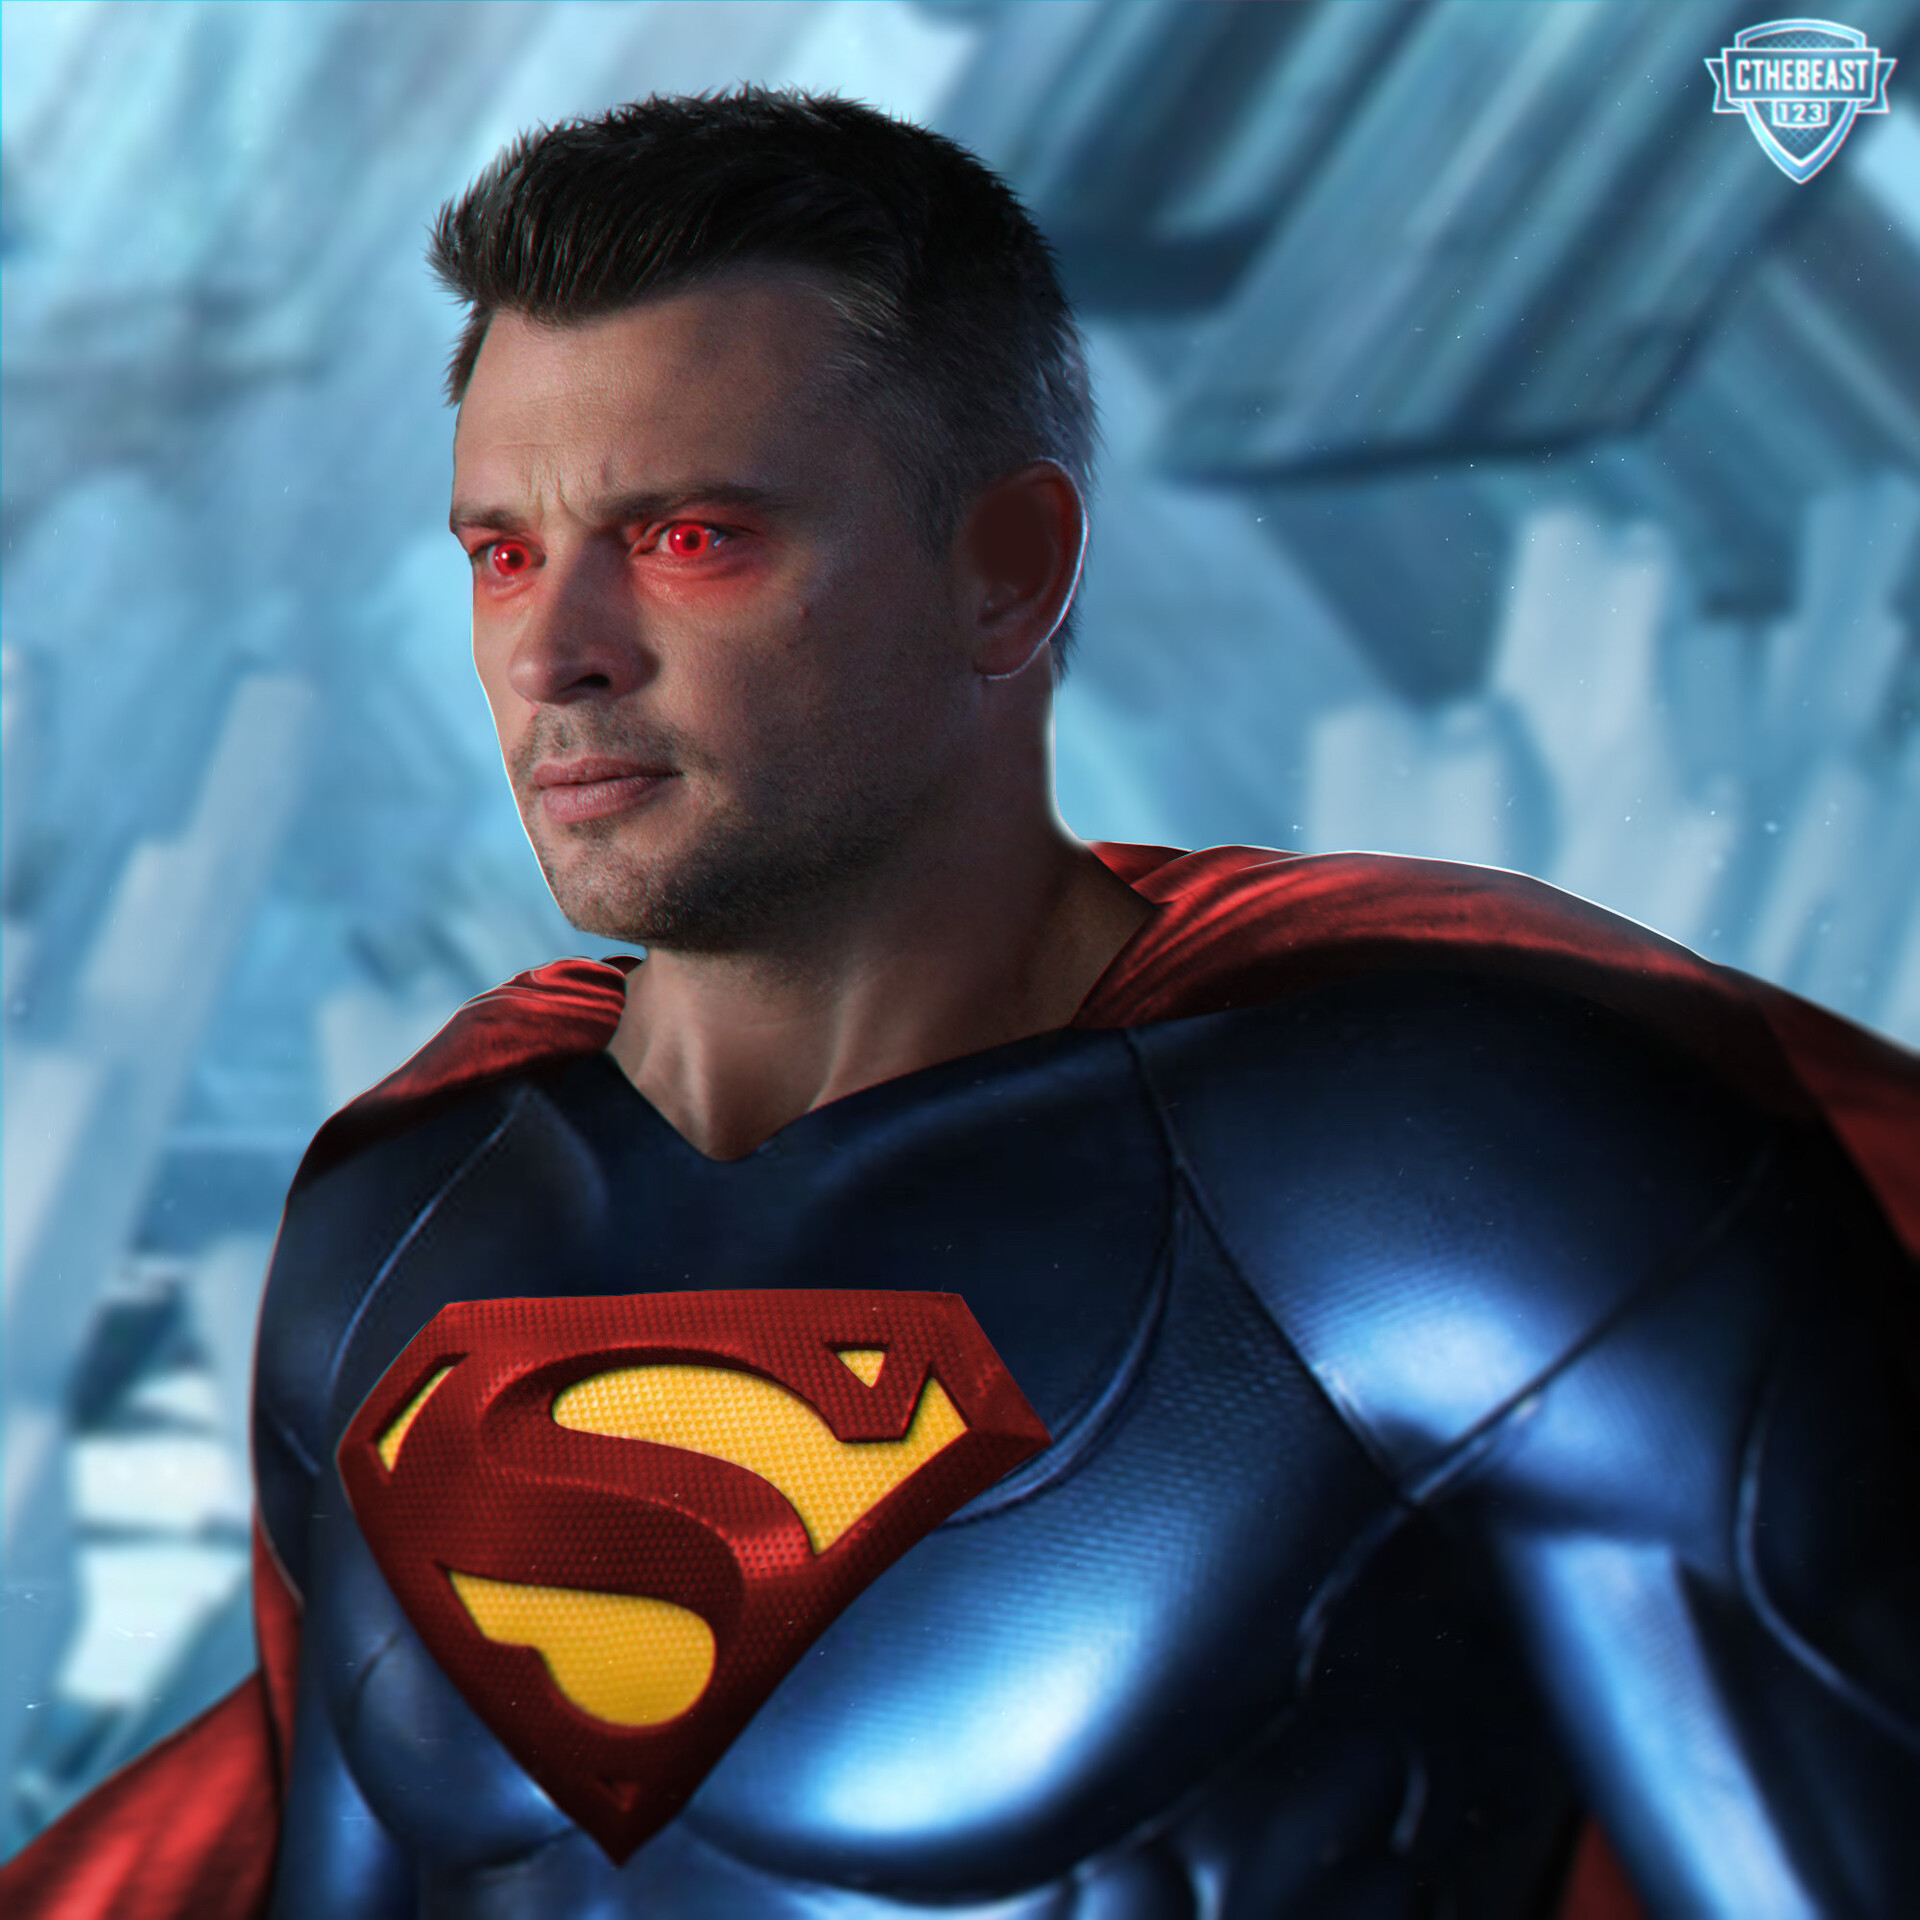 ArtStation - Superman - Smallville New Suit - Tom Welling